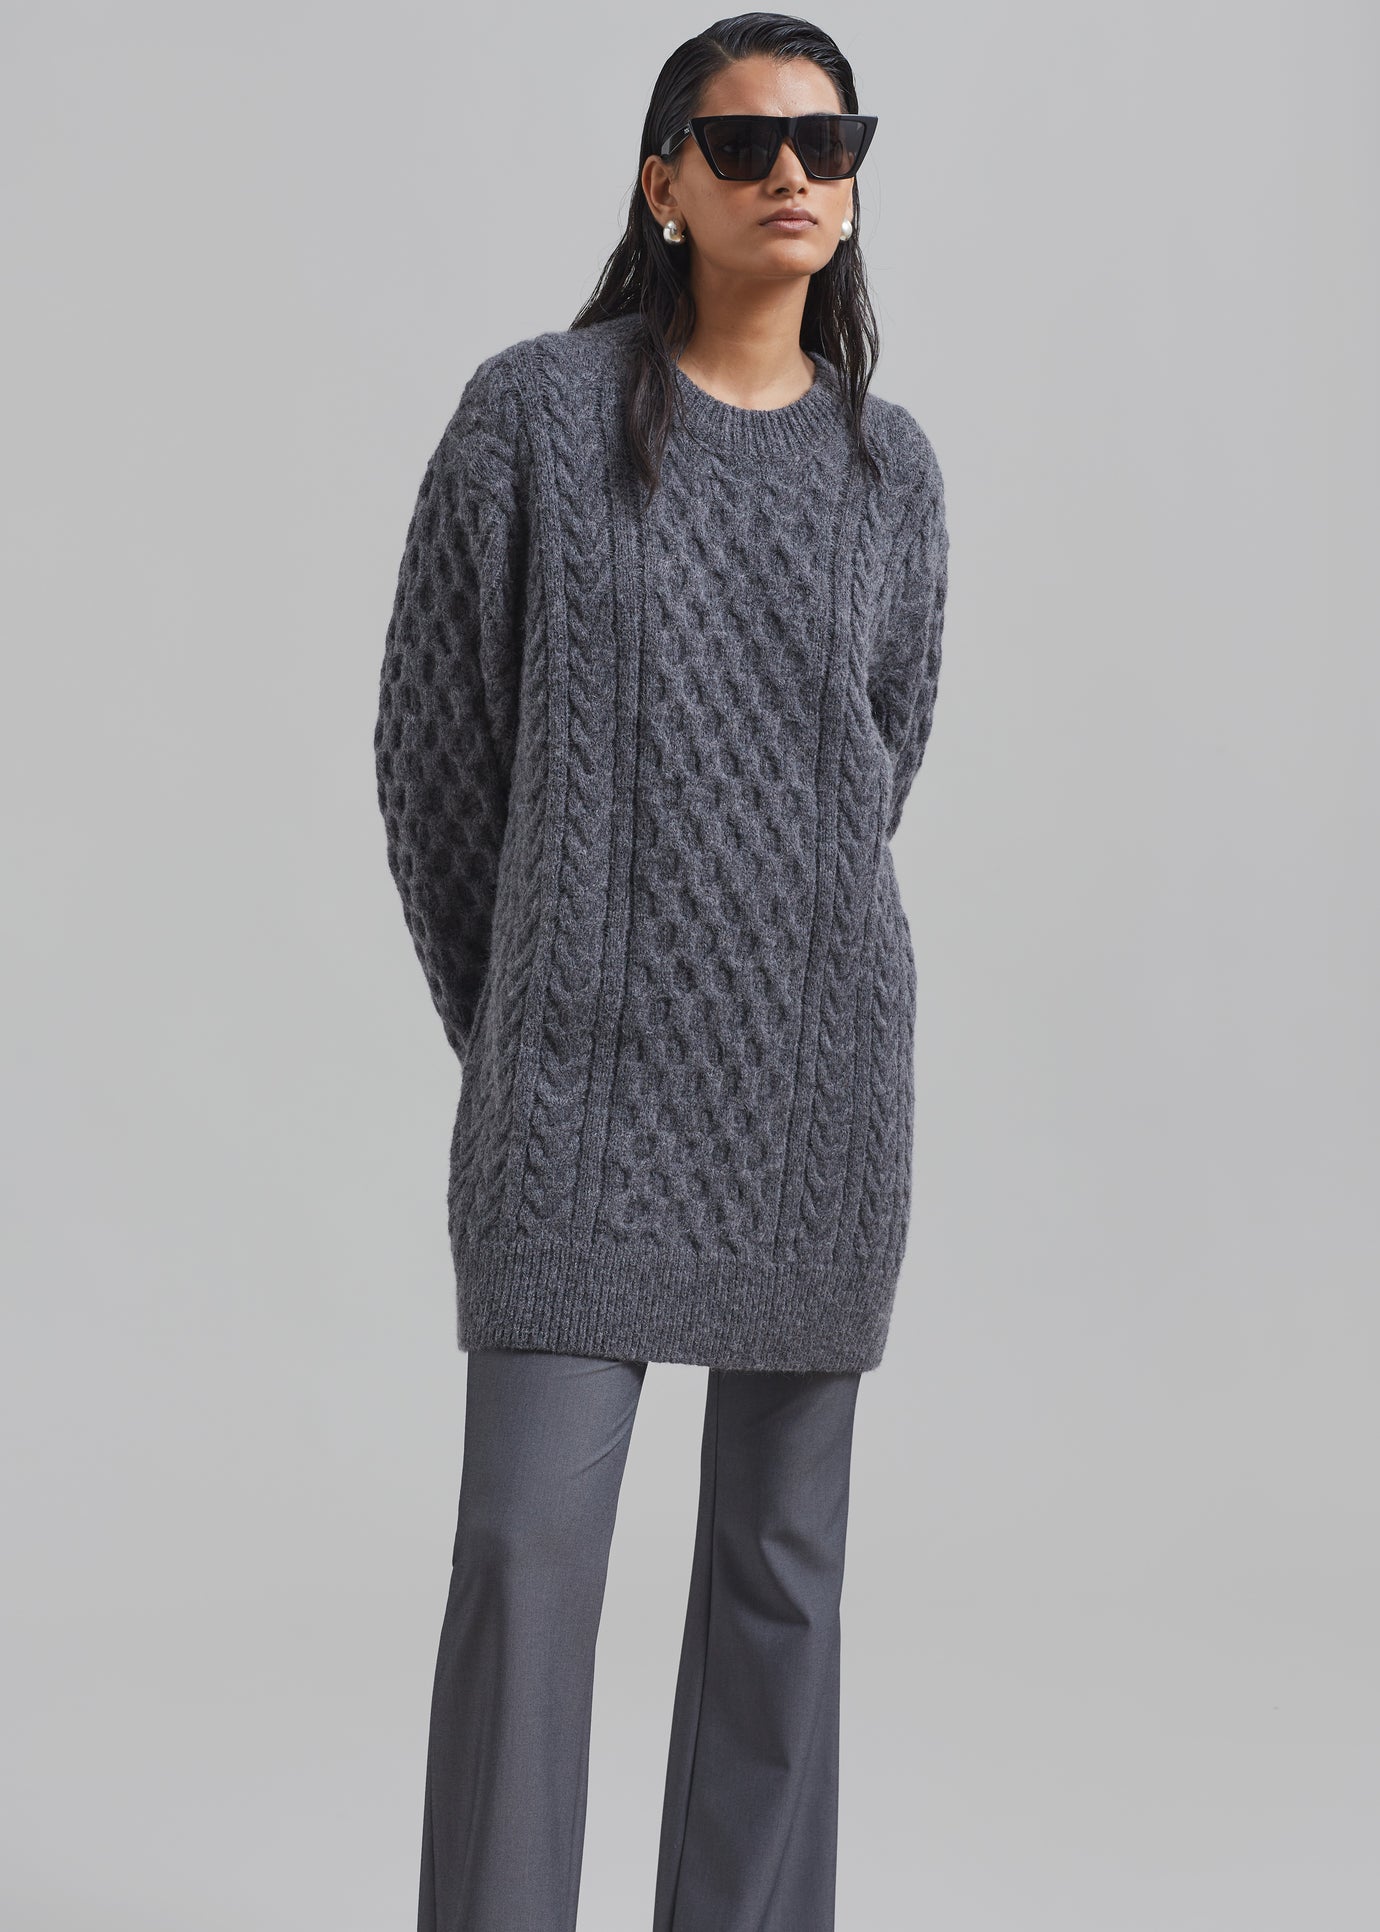 Leighton Braided Knit Sweater - Grey